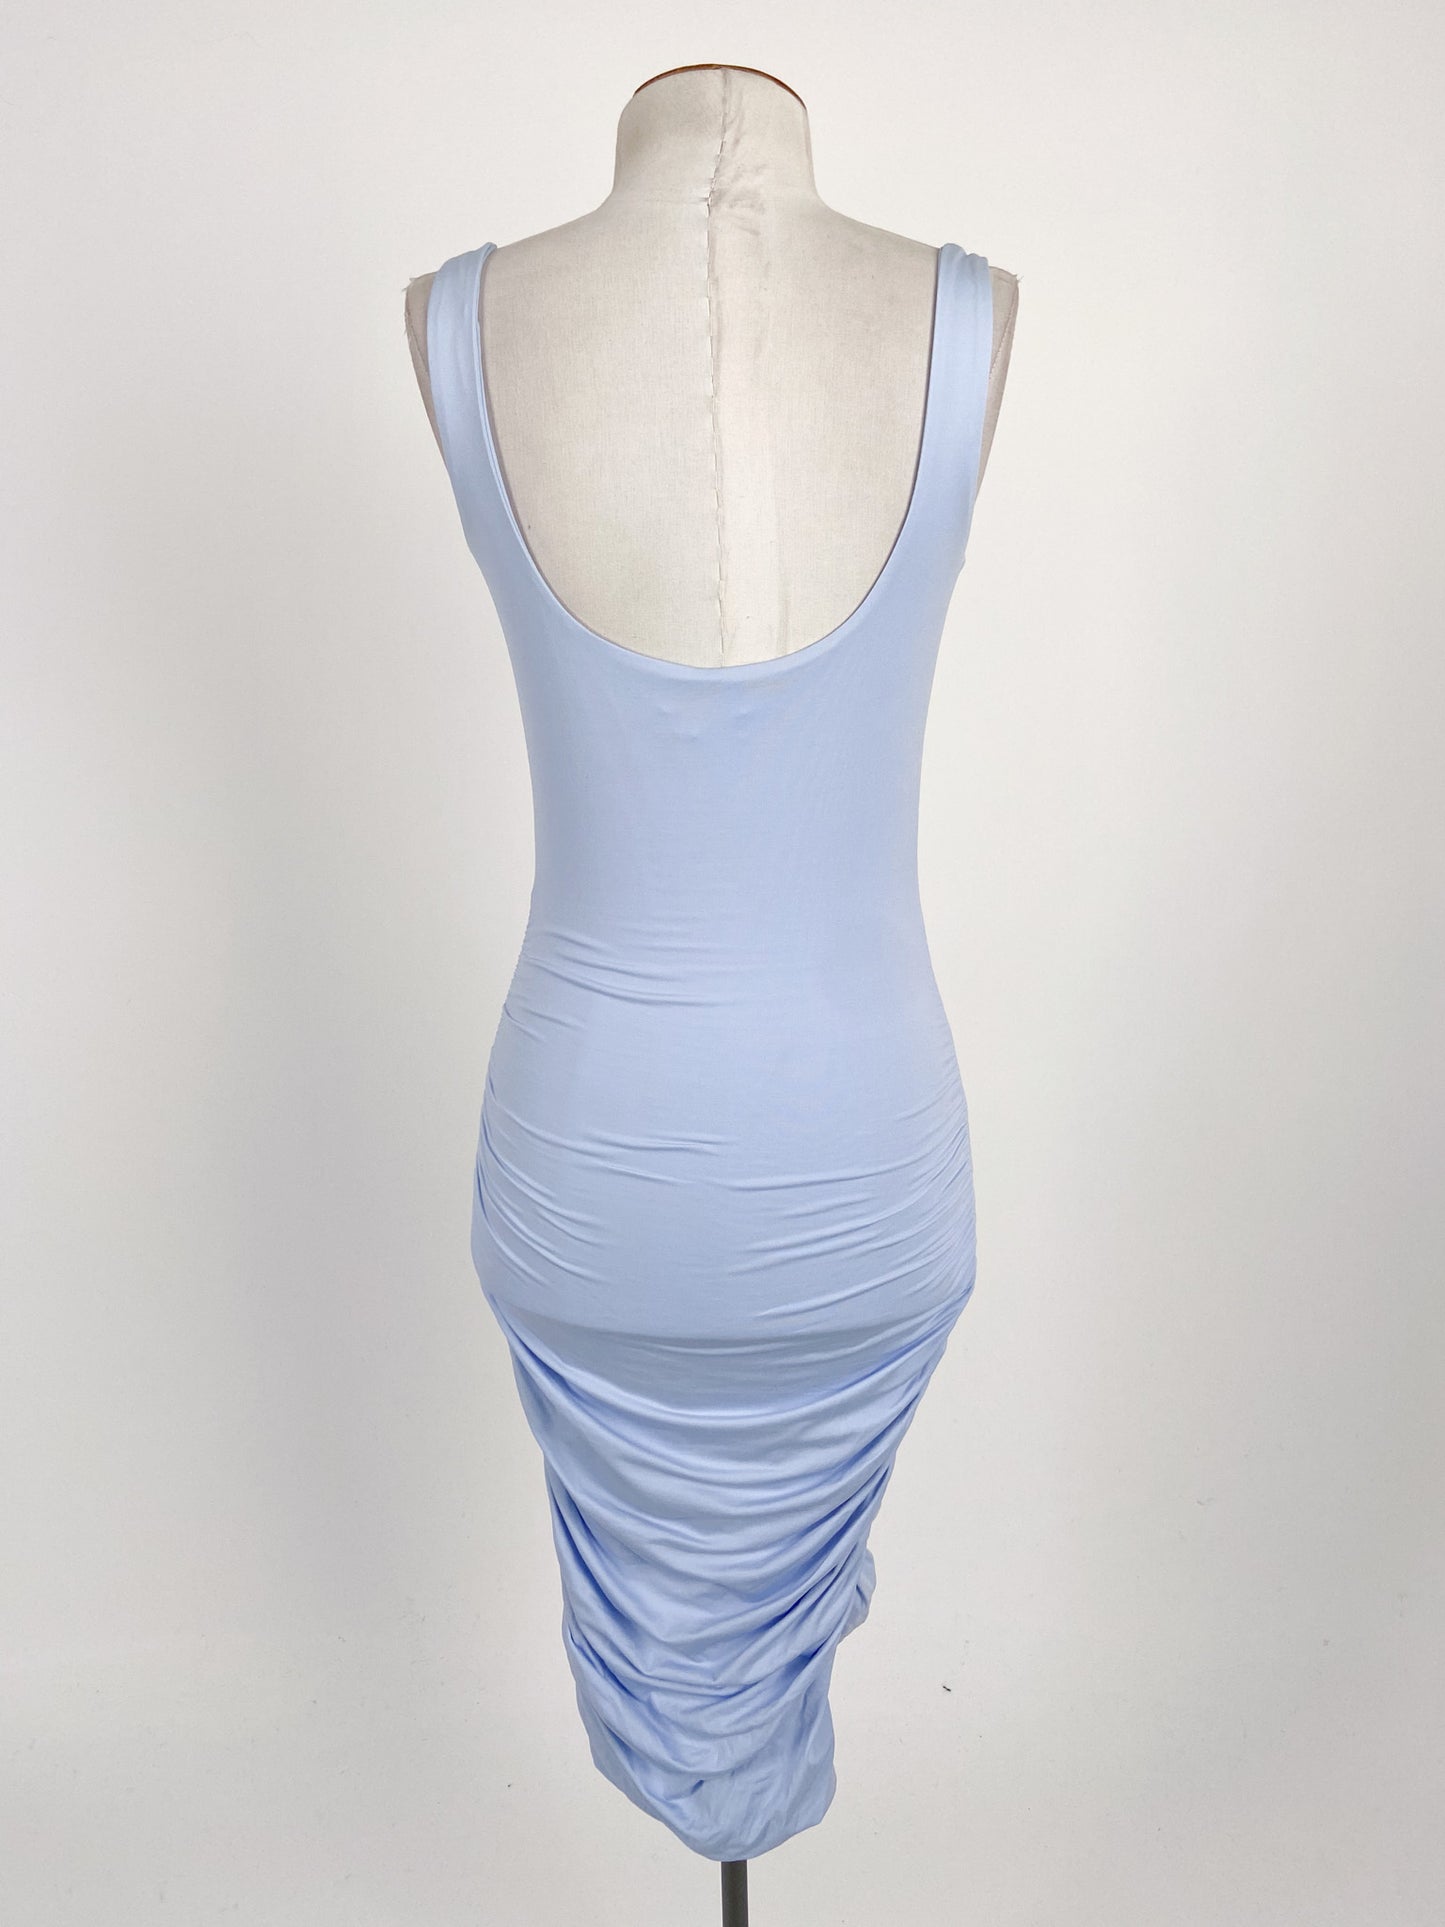 Kookai | Blue Cocktail Dress | Size 12